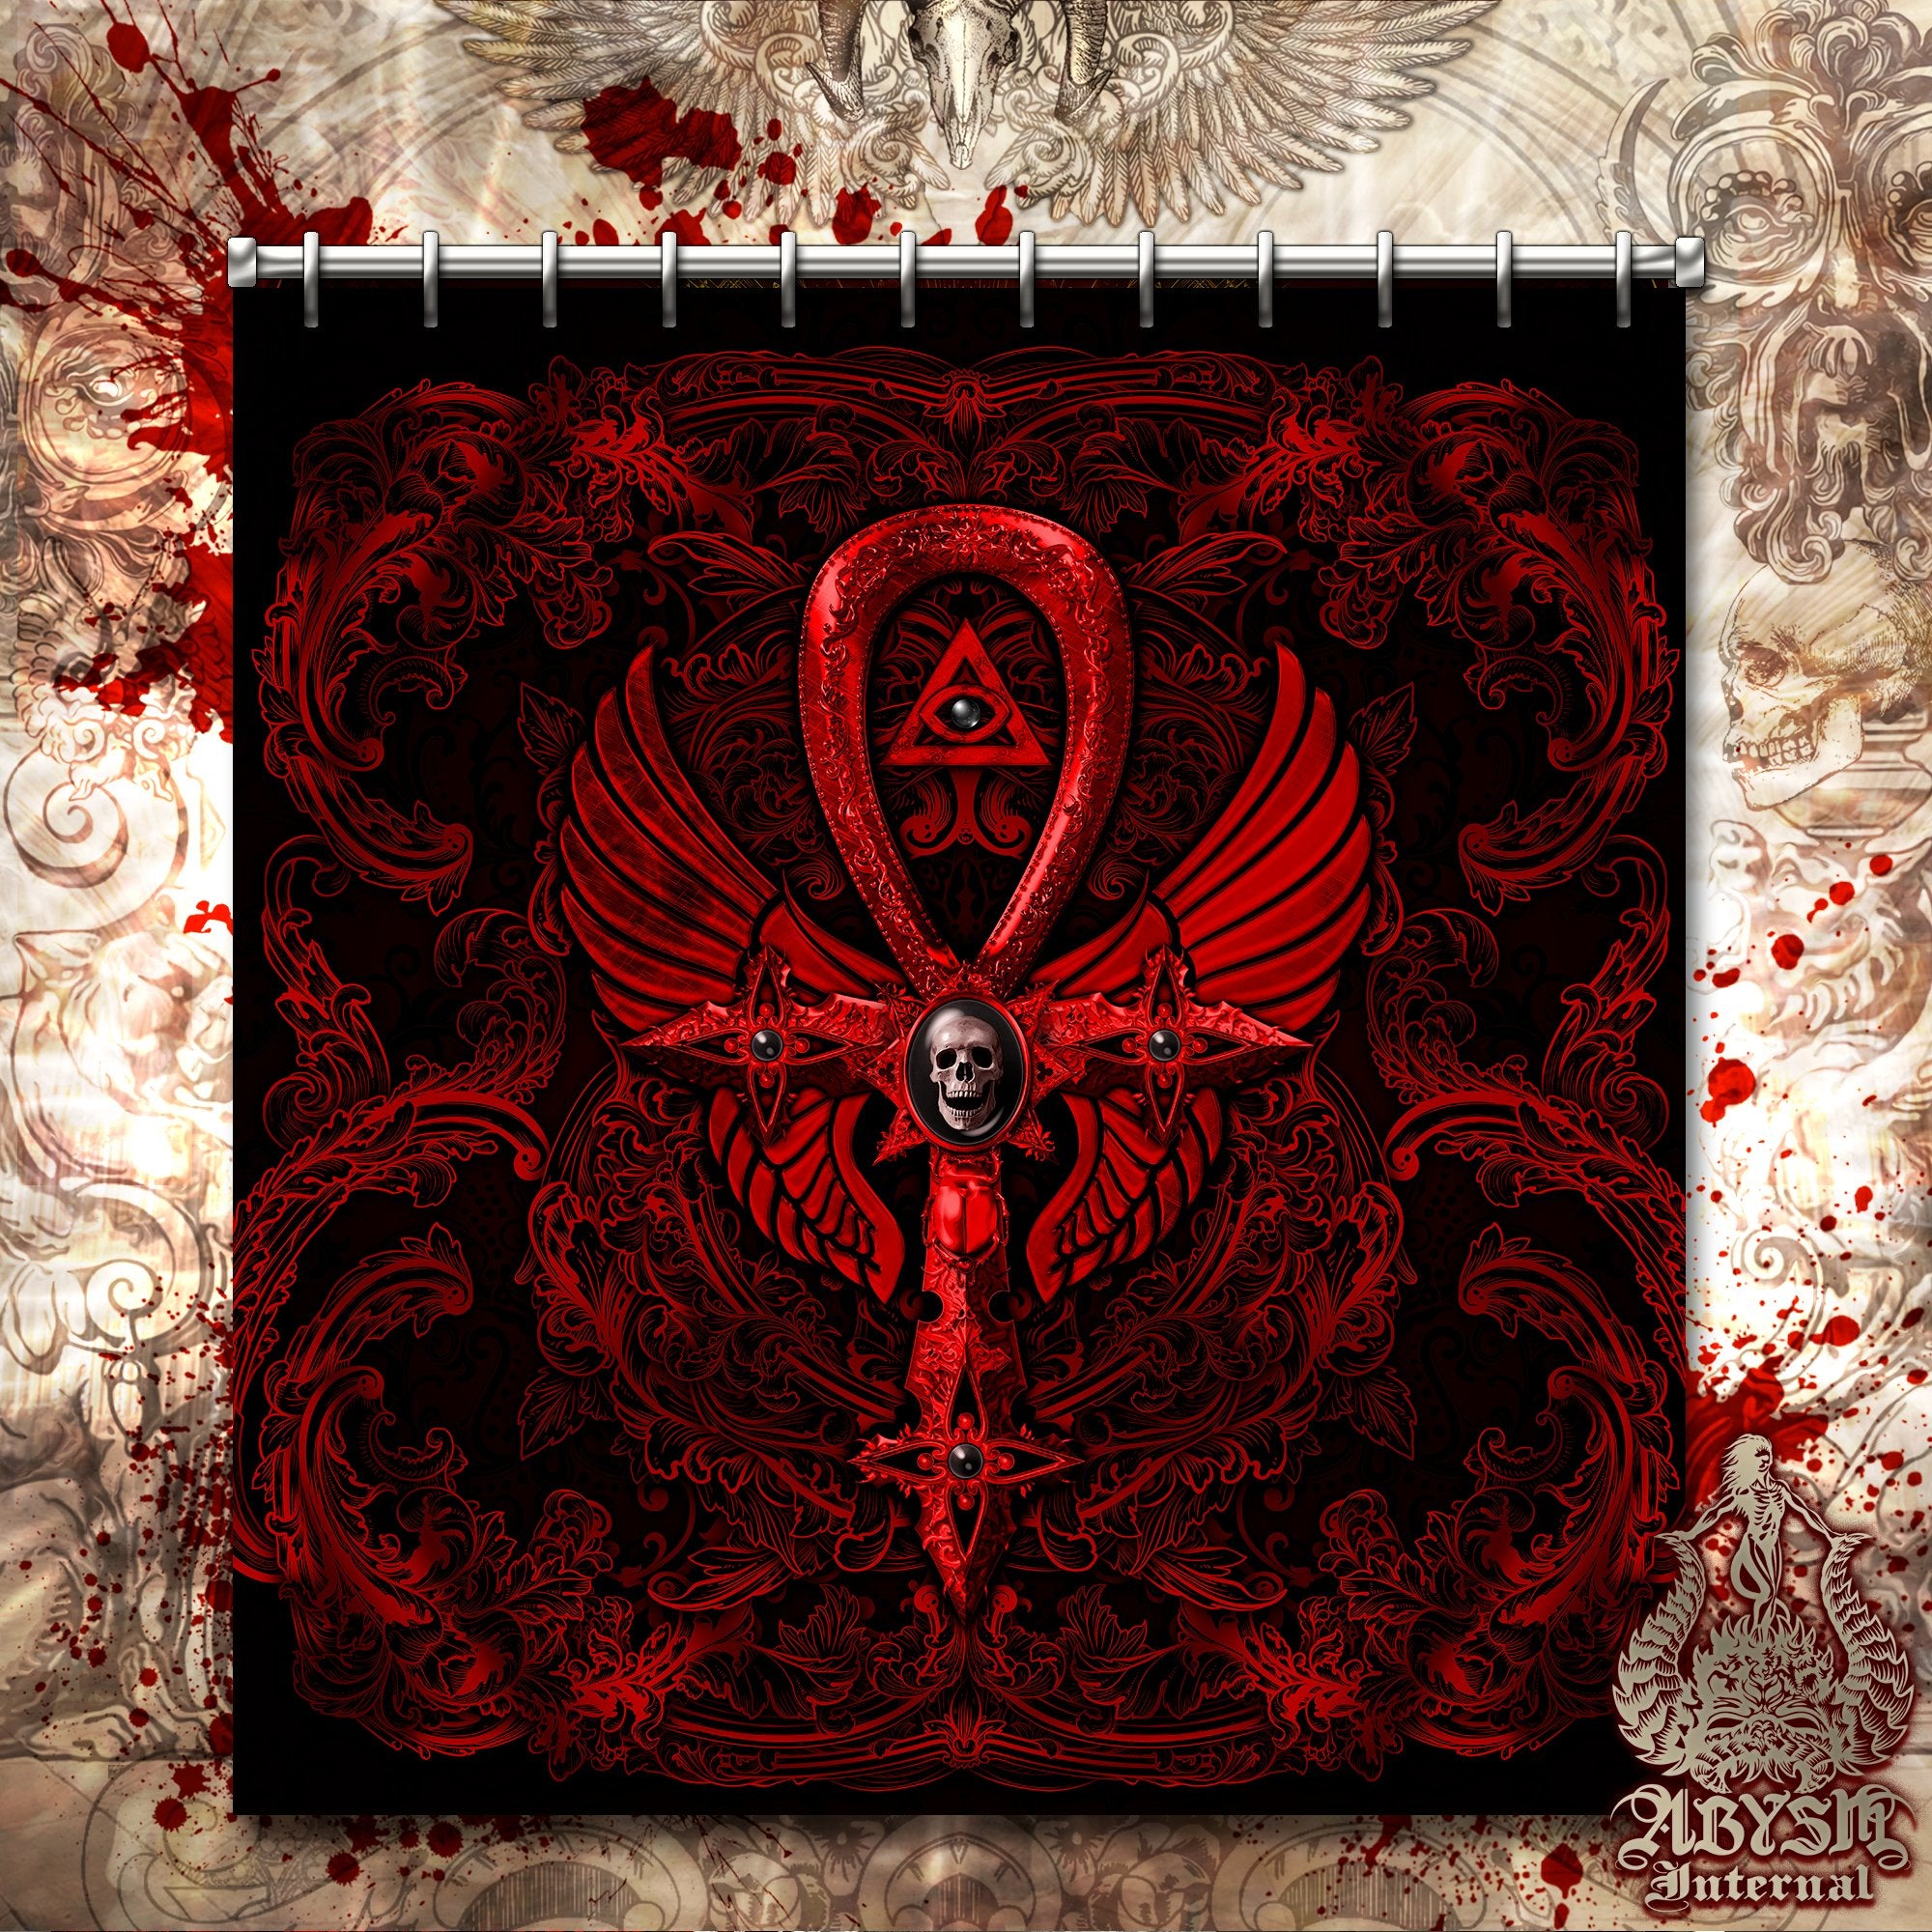 Gothic Shower Curtain, 71x74 inches, Goth Ankh Cross, Dark Bathroom Decor, Occult - Black, Red, Gold, 3 Colors - Abysm Internal